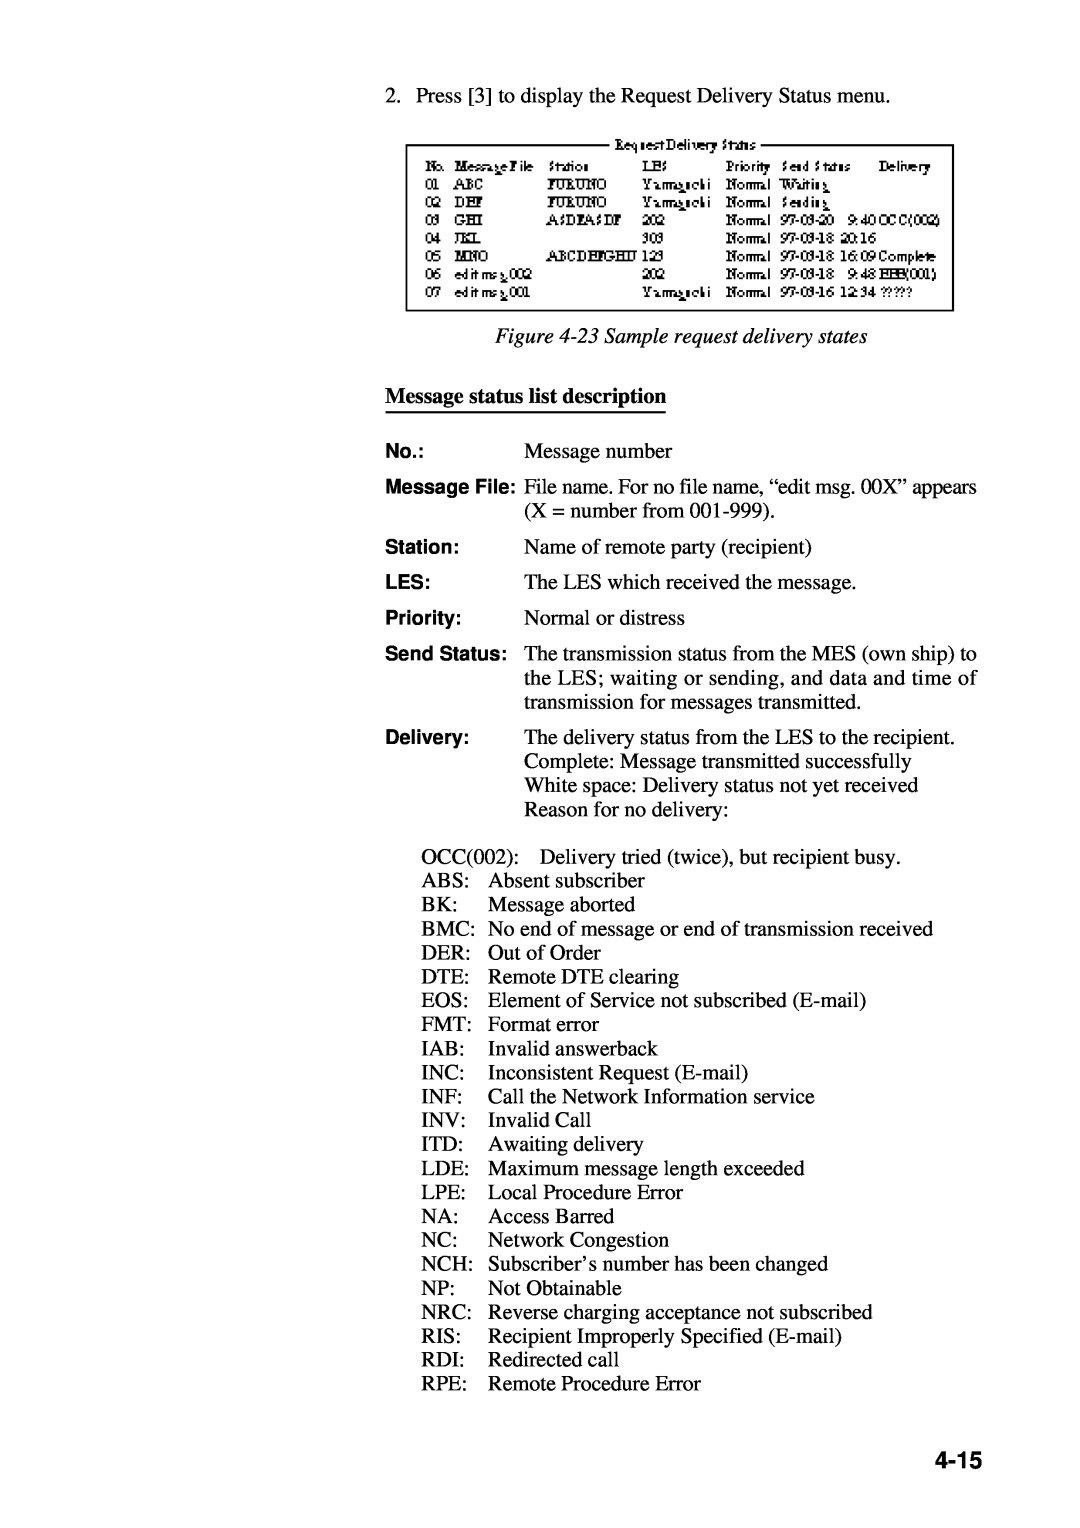 Furuno RC-1500-1T manual 4-15, 23 Sample request delivery states, Message status list description 